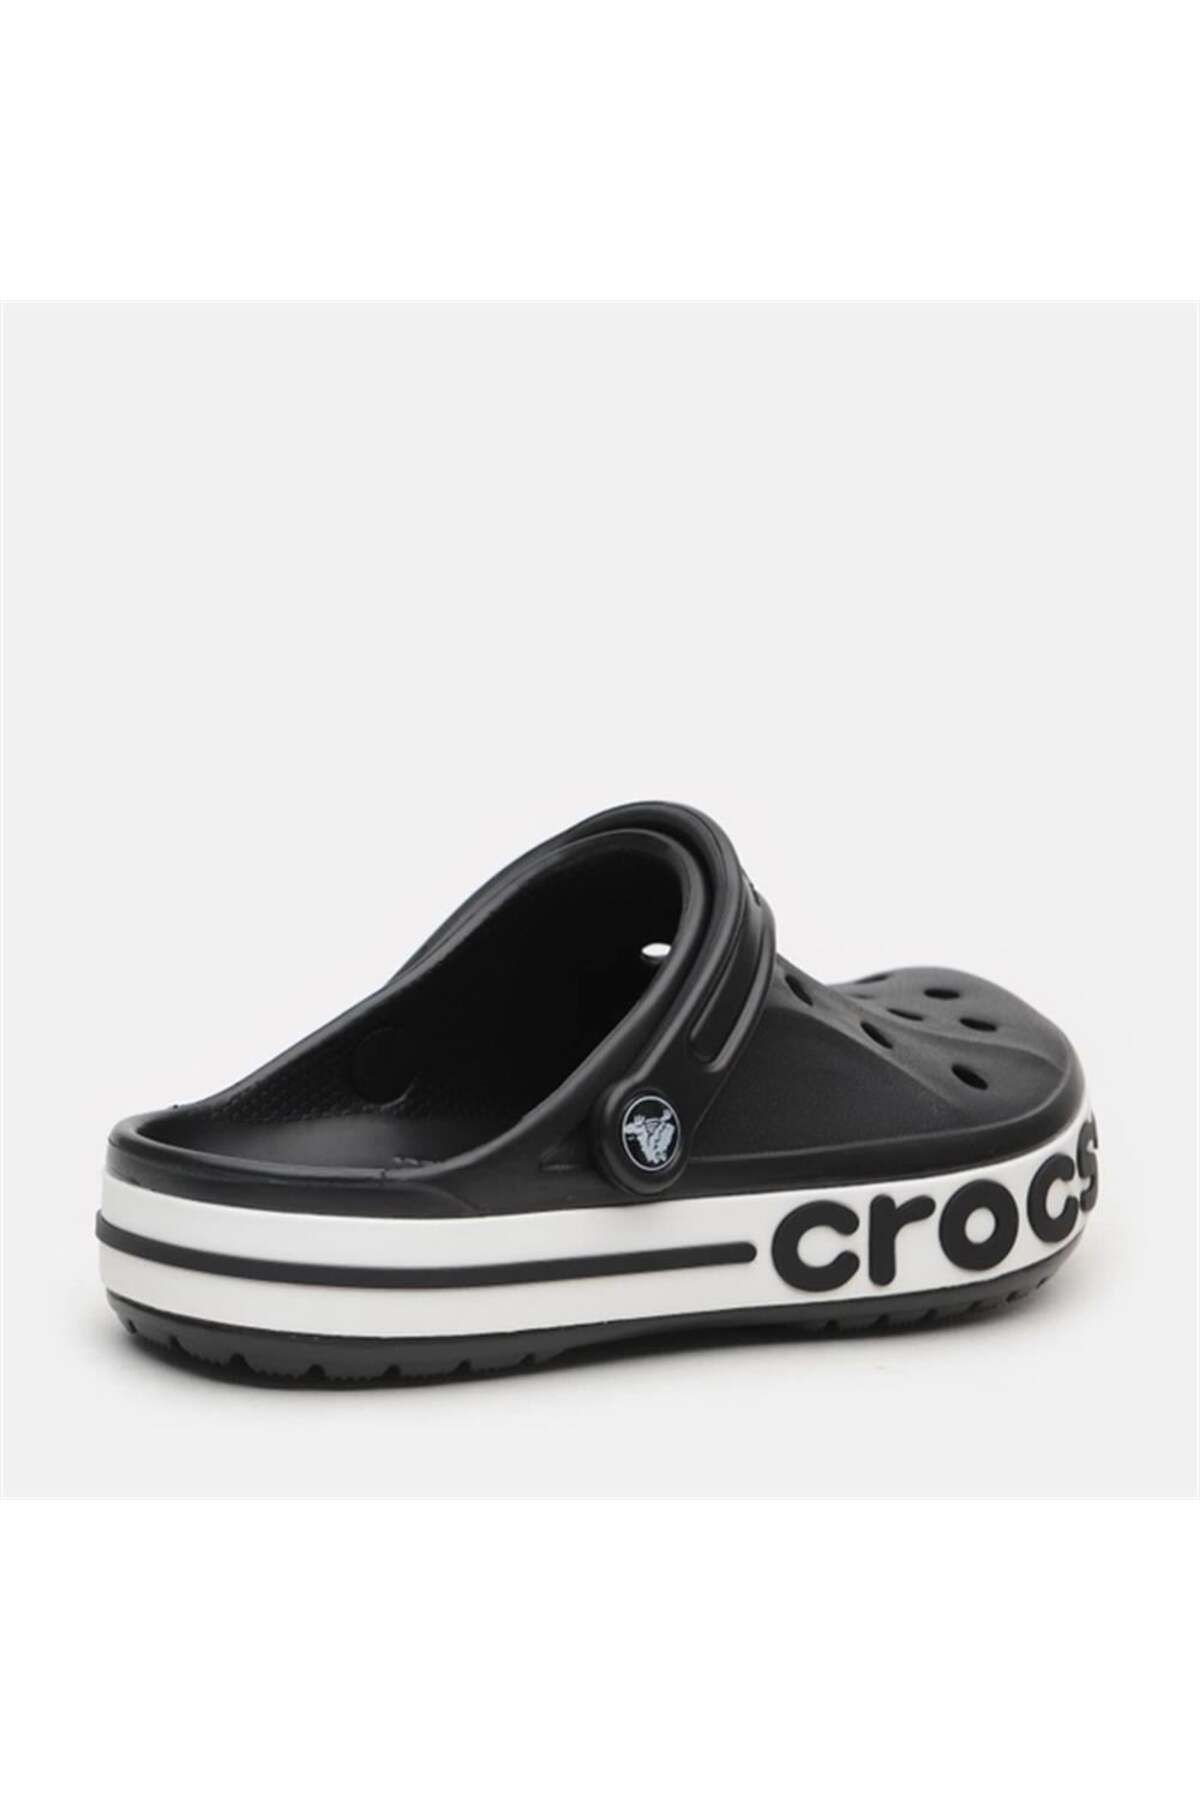 Crocs 205089 Bayaban Clog Sandals Unisex